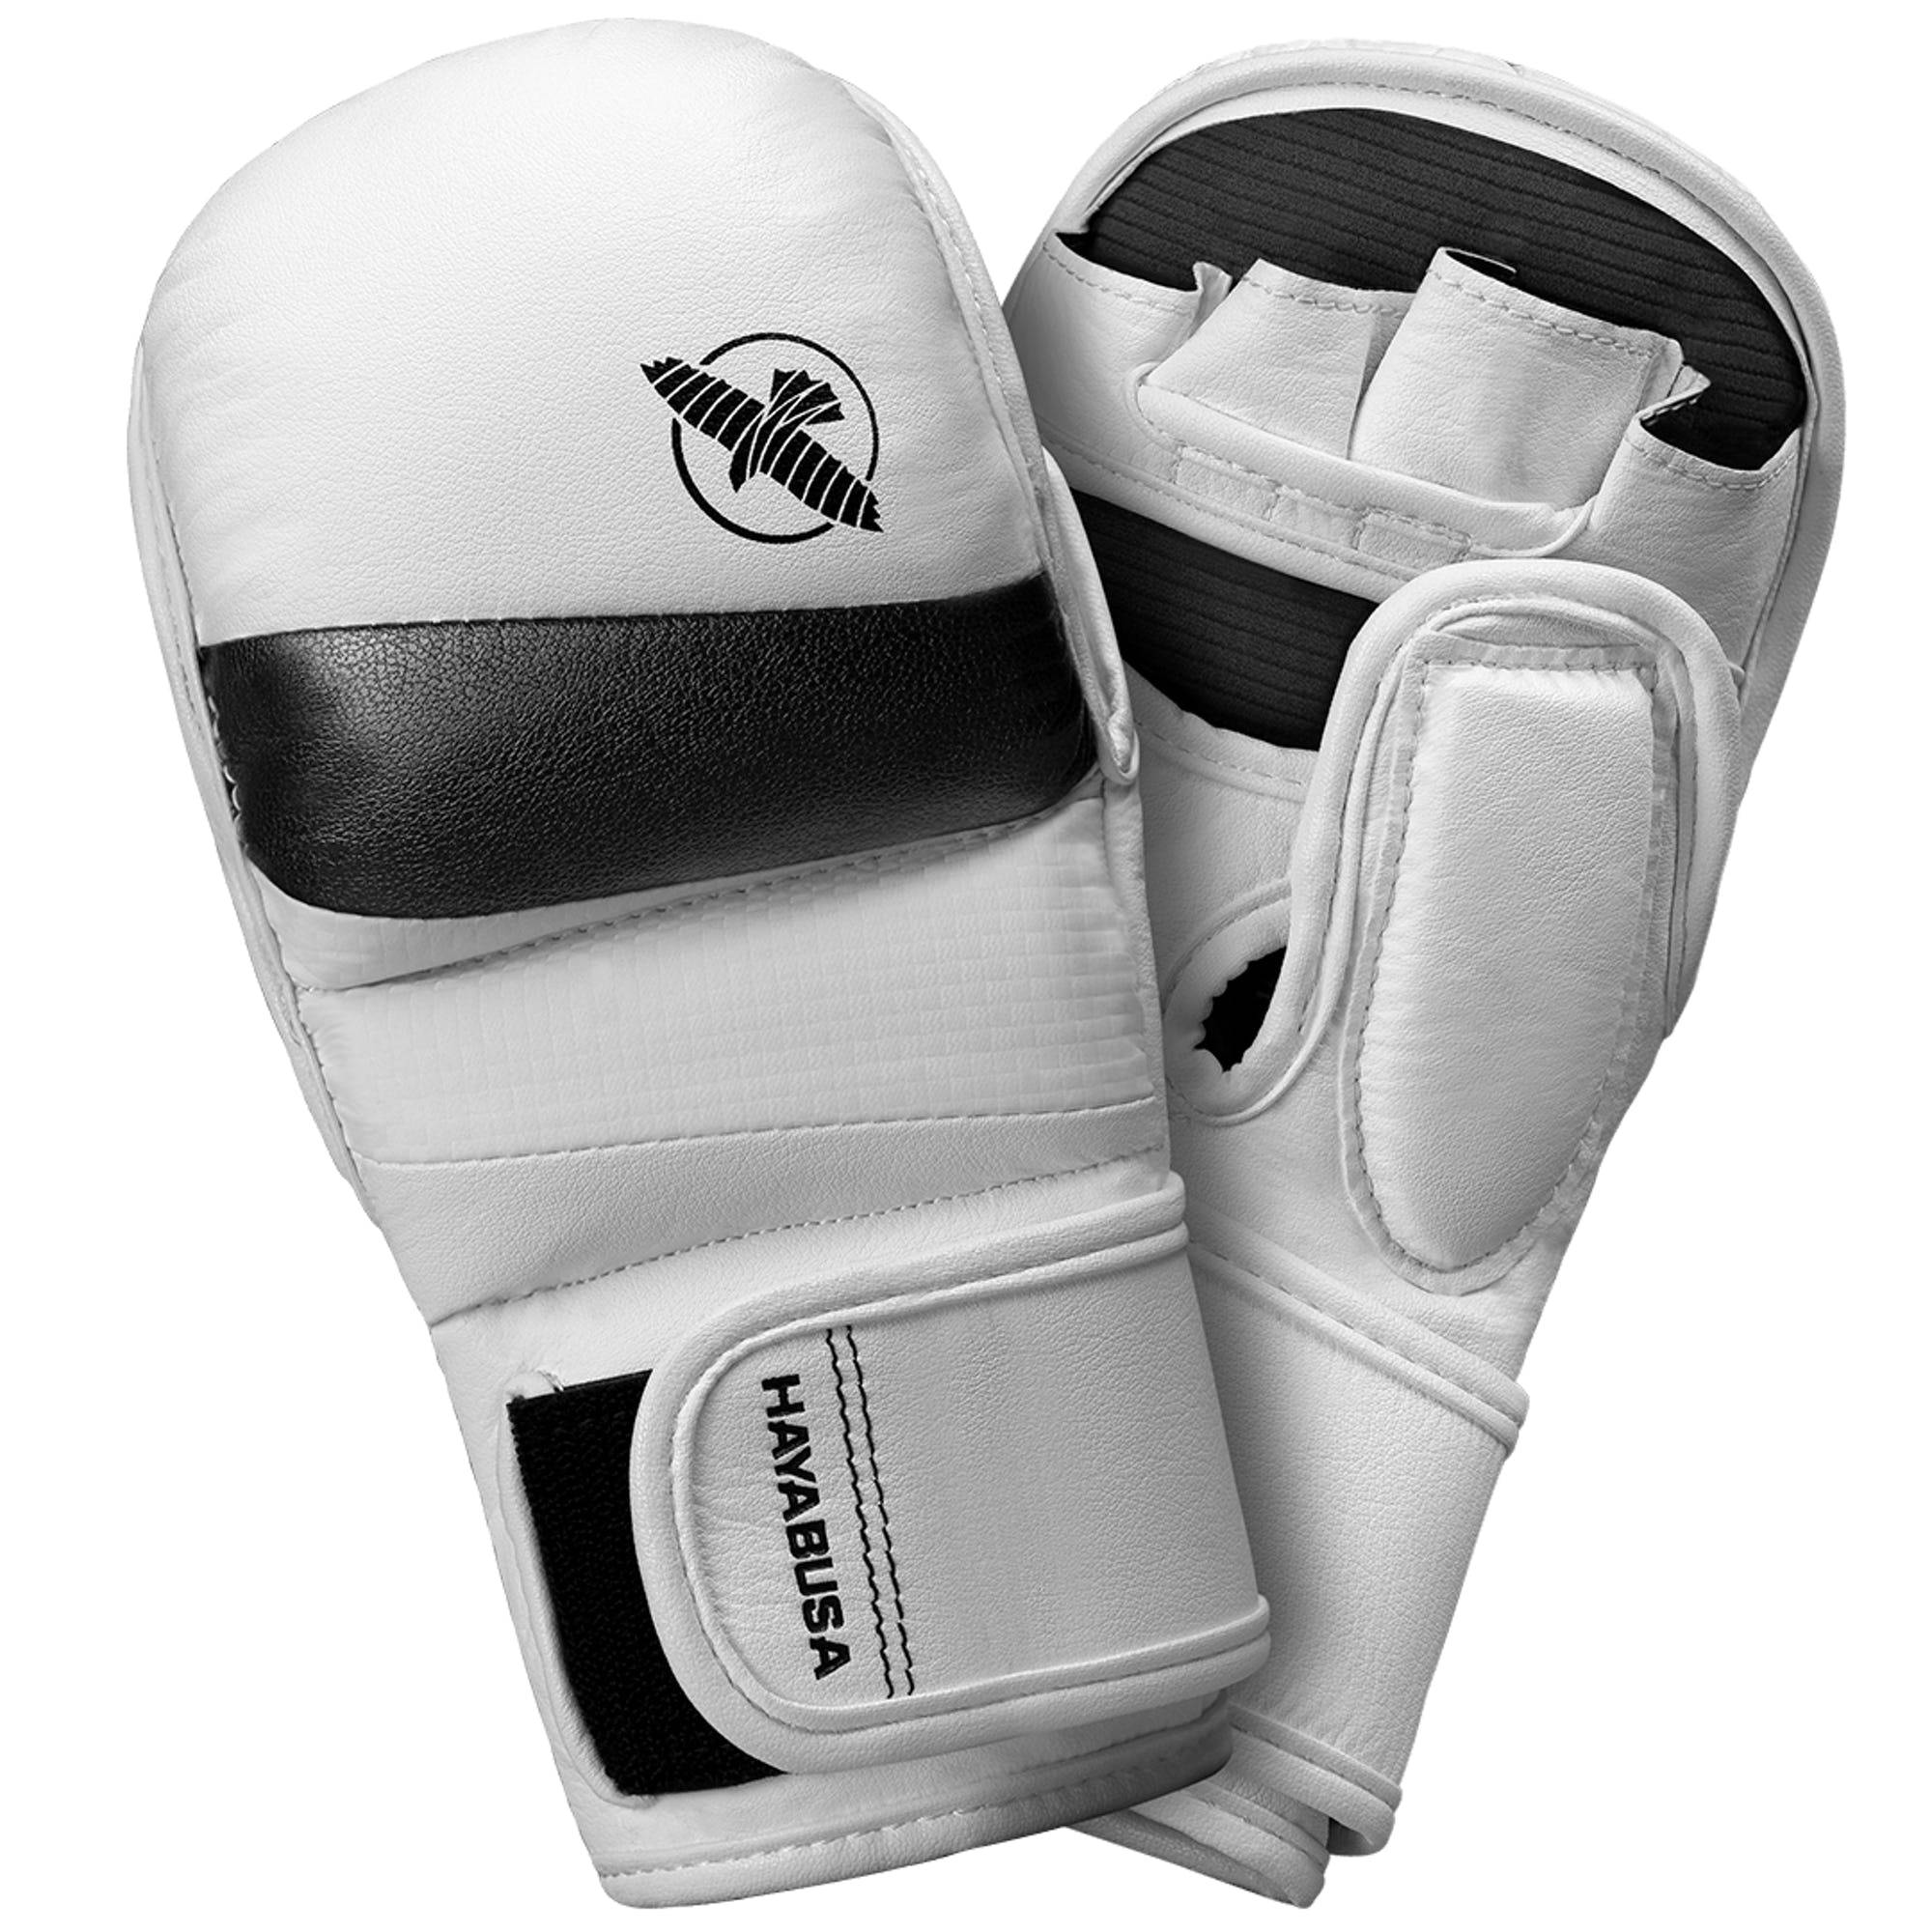 Hayabusa | Hybrid Gloves - T3 - 7oz - XTC Fitness - Exercise Equipment Superstore - Canada - Hybrid Gloves